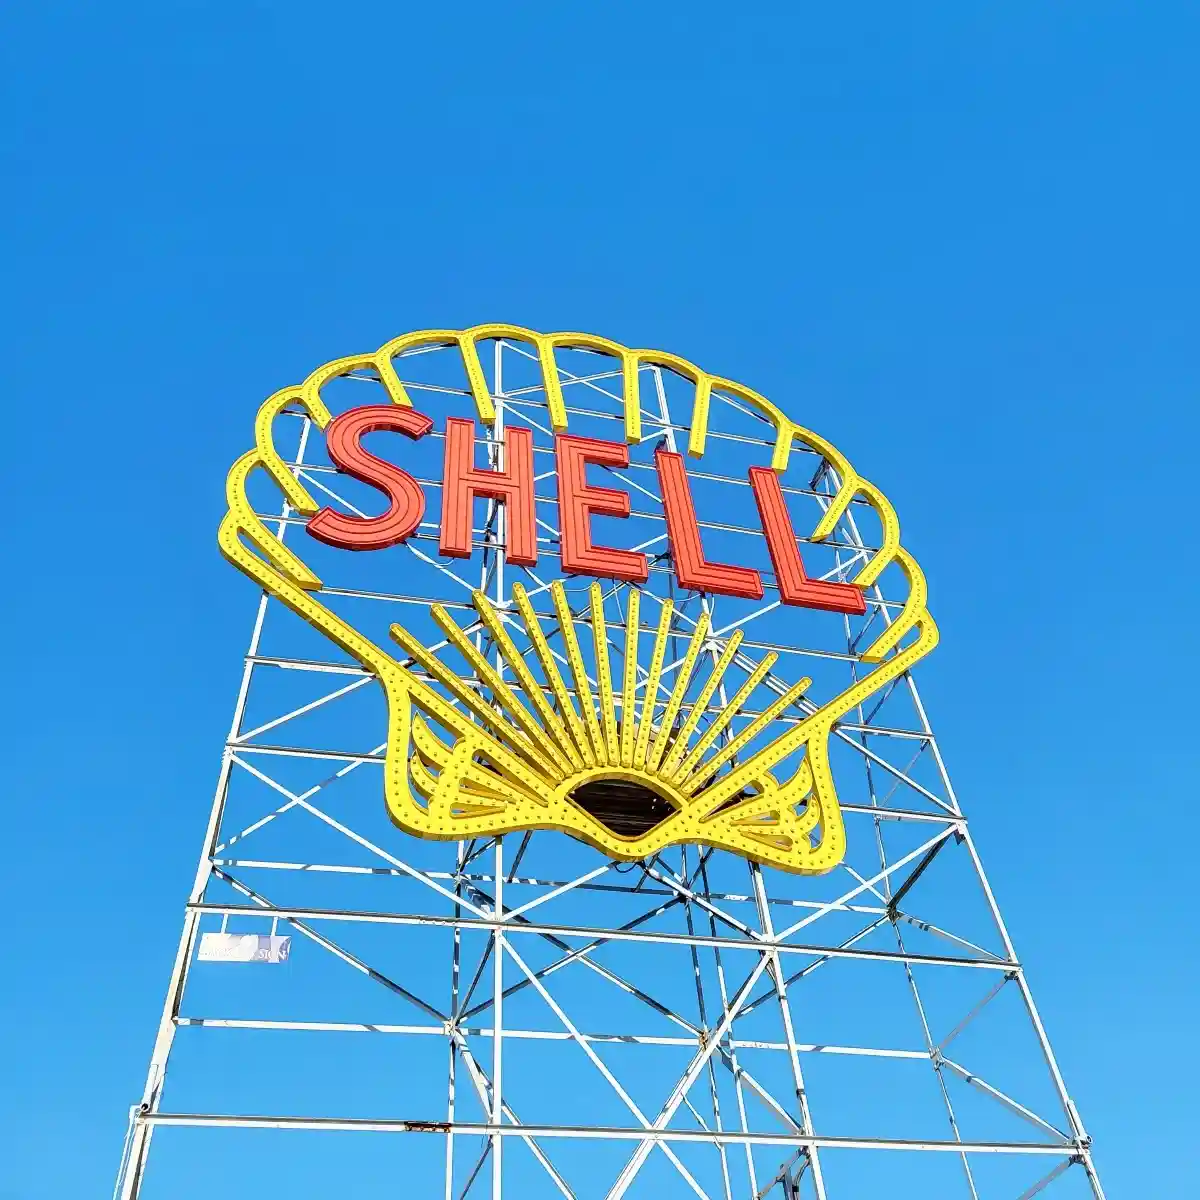 Shell восстановился и вышел в плюс после неудачного прошлого года. Фото: Only In Boston / Twitter.com